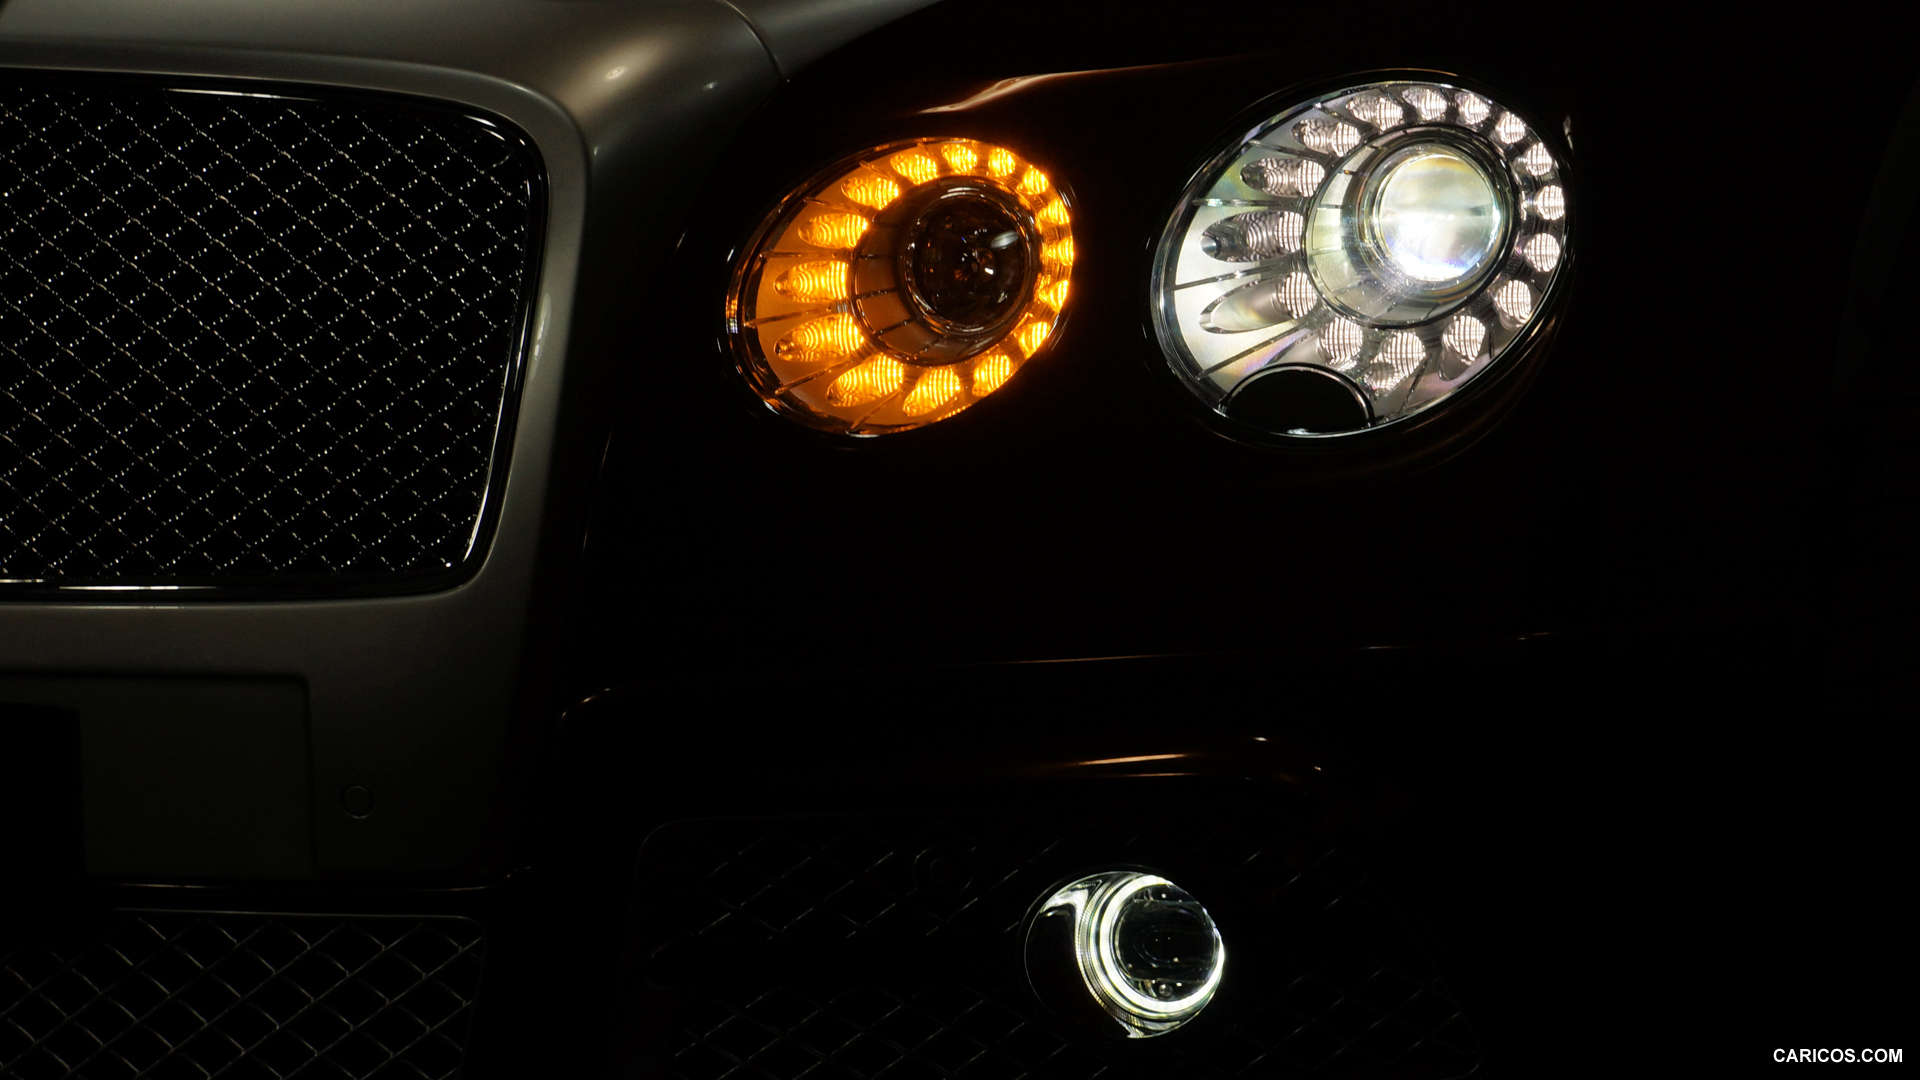 2014 Mansory Bentley Flying Spur  - Headlight, #6 of 8